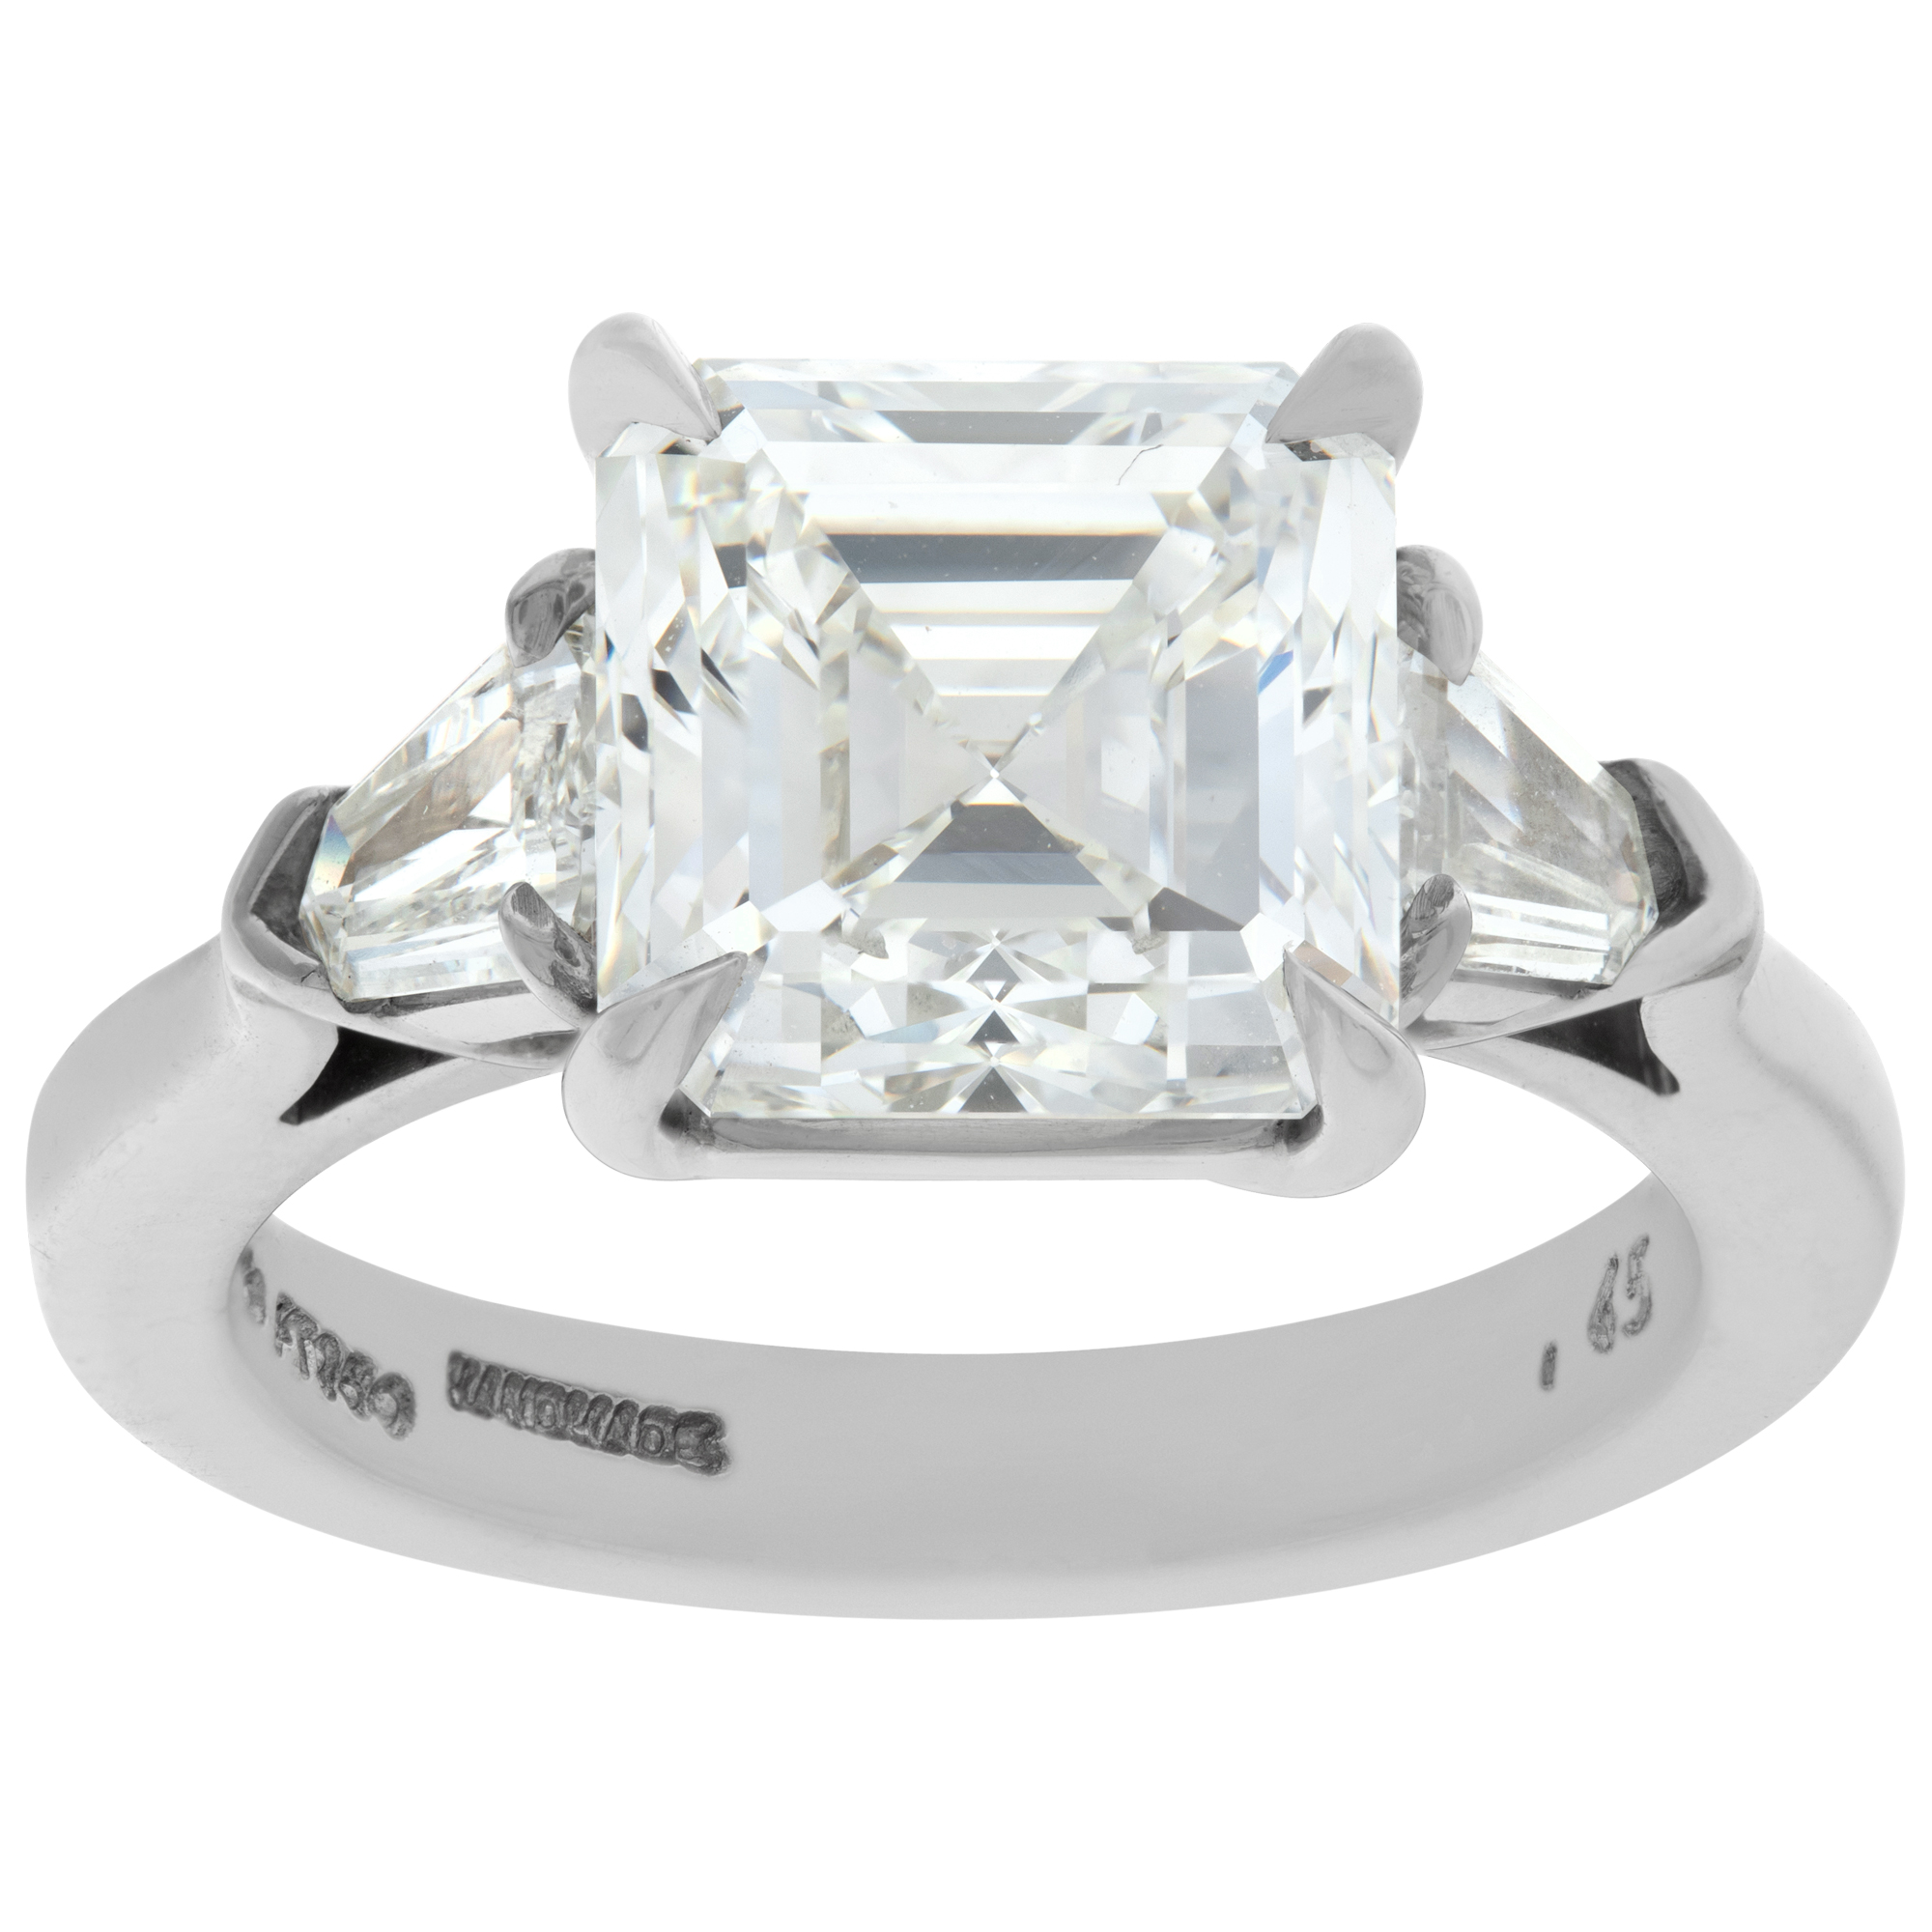 GIA certified square emerald cut diamond 4.08 carat (G color, VVS1 clarity) ring set in platinum (Stones)